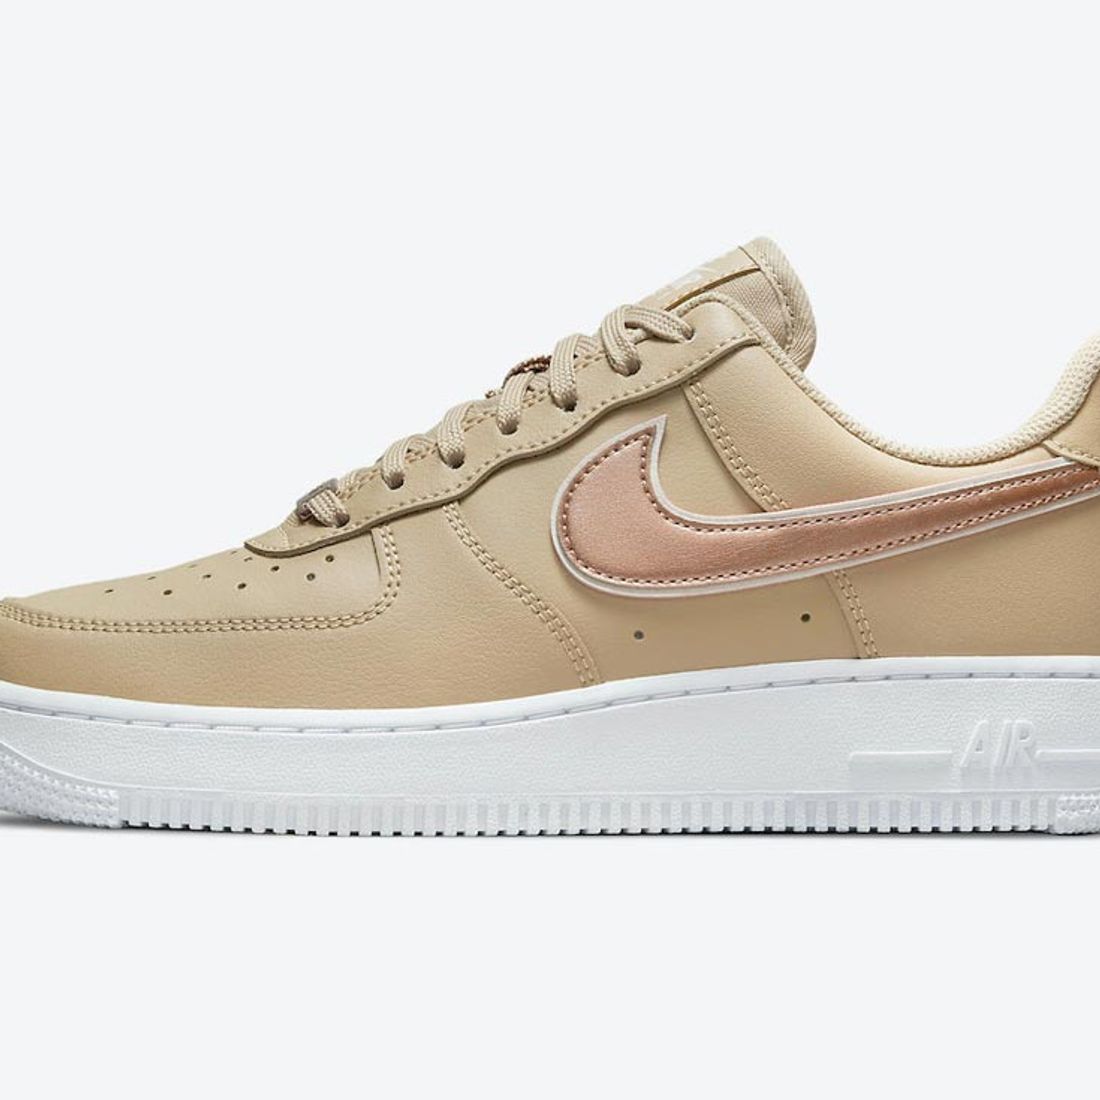 Nike Air Force 1 Glistens in Gold' - Sneaker Freaker